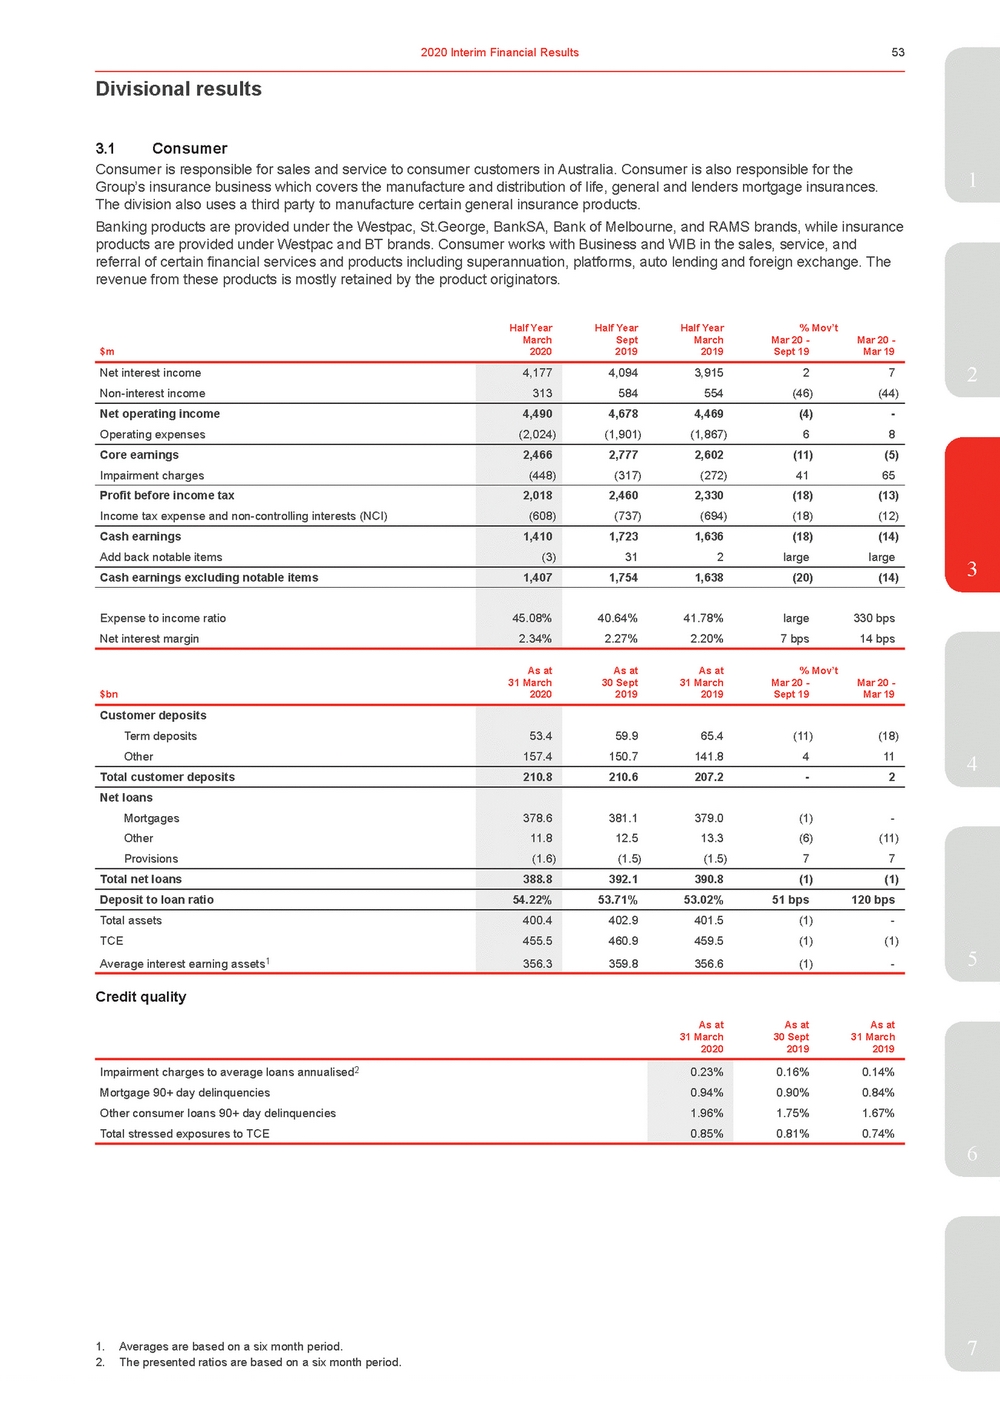 11676-3-ex1_westpac 2020 interim financial results announcement_page_058.jpg